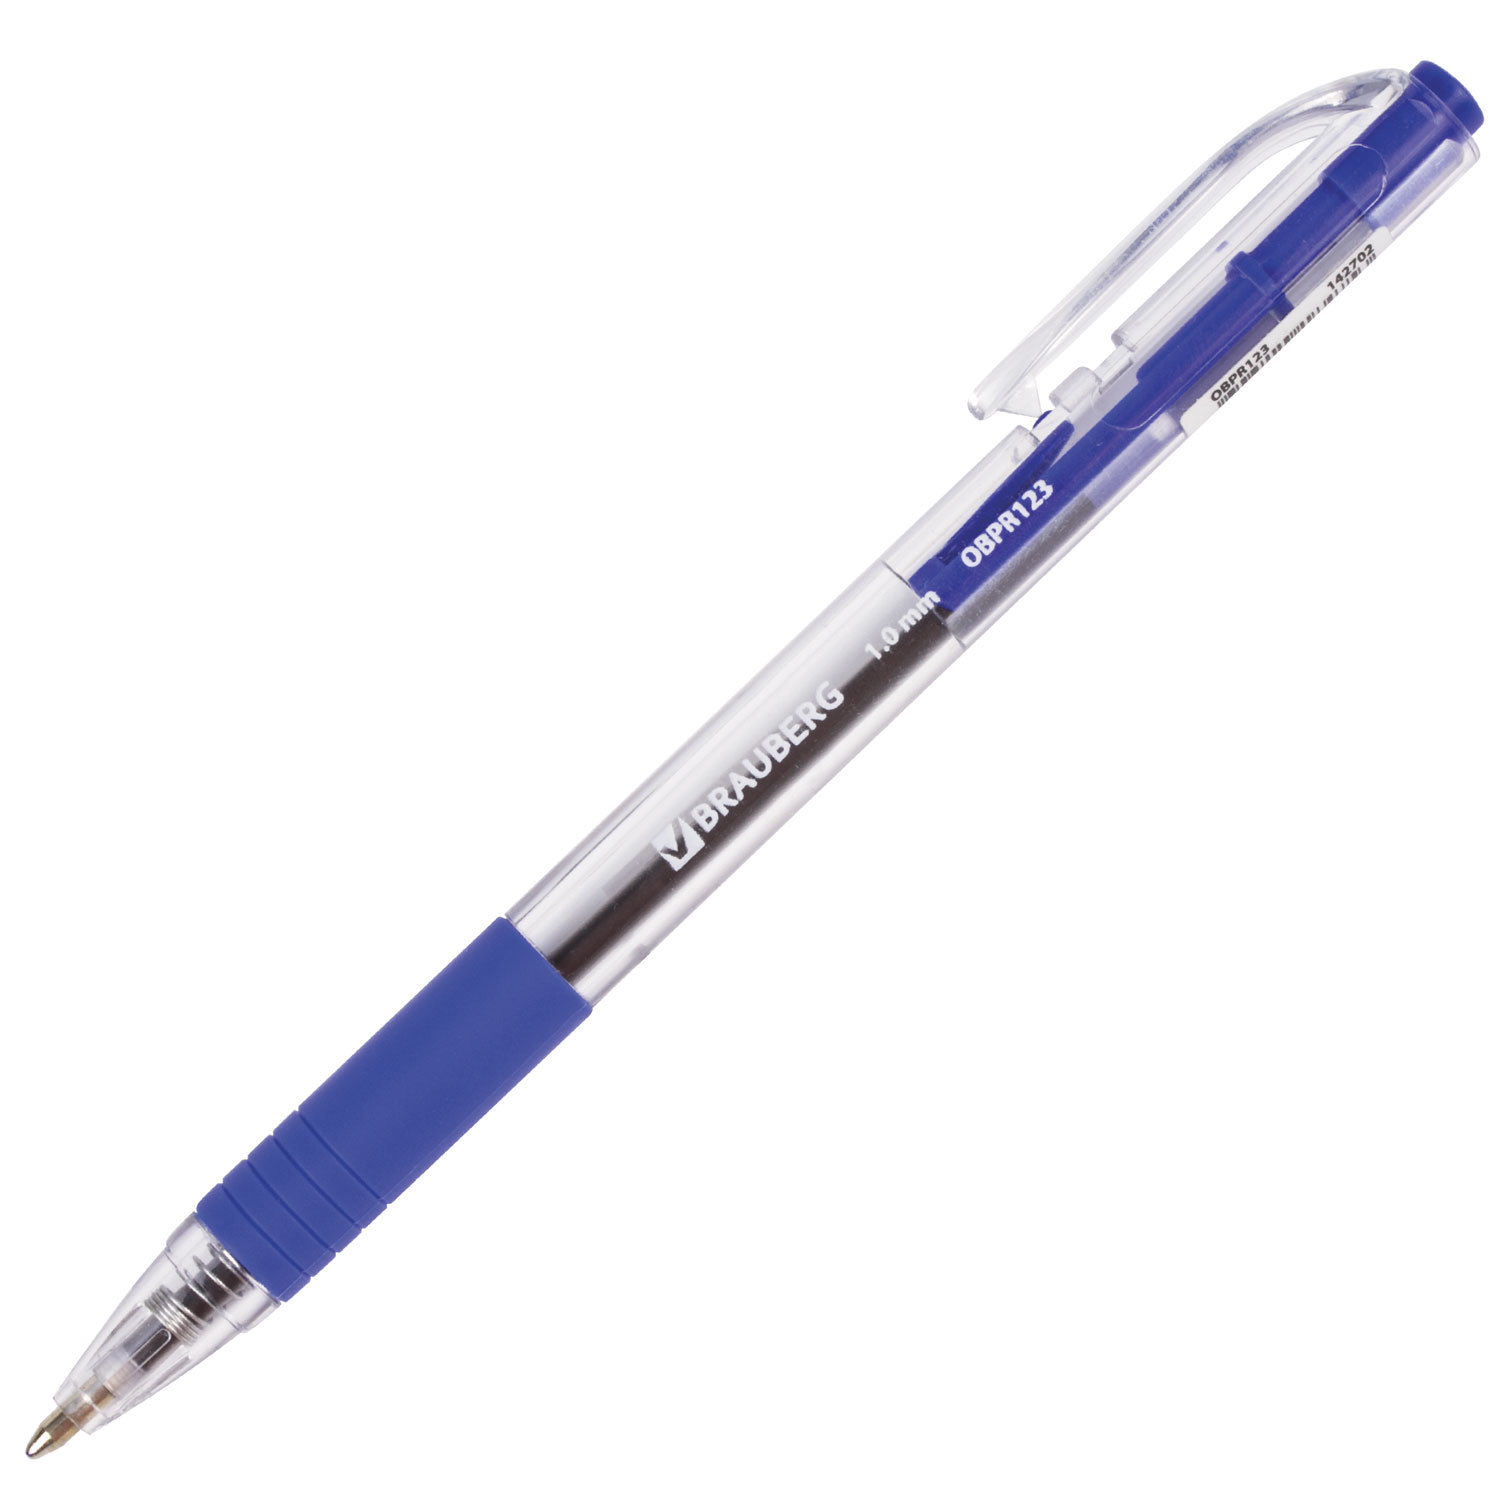 Письма 0 5 мм. Ручка click синяя BRAUBERG/142702. Ручка шариковая масляная автоматическая BRAUBERG «click Blue». Ручка автоматическая БРАУБЕРГ шариковая 0.5мм. Ручка BRAUBERG Ballpoint bpr123.